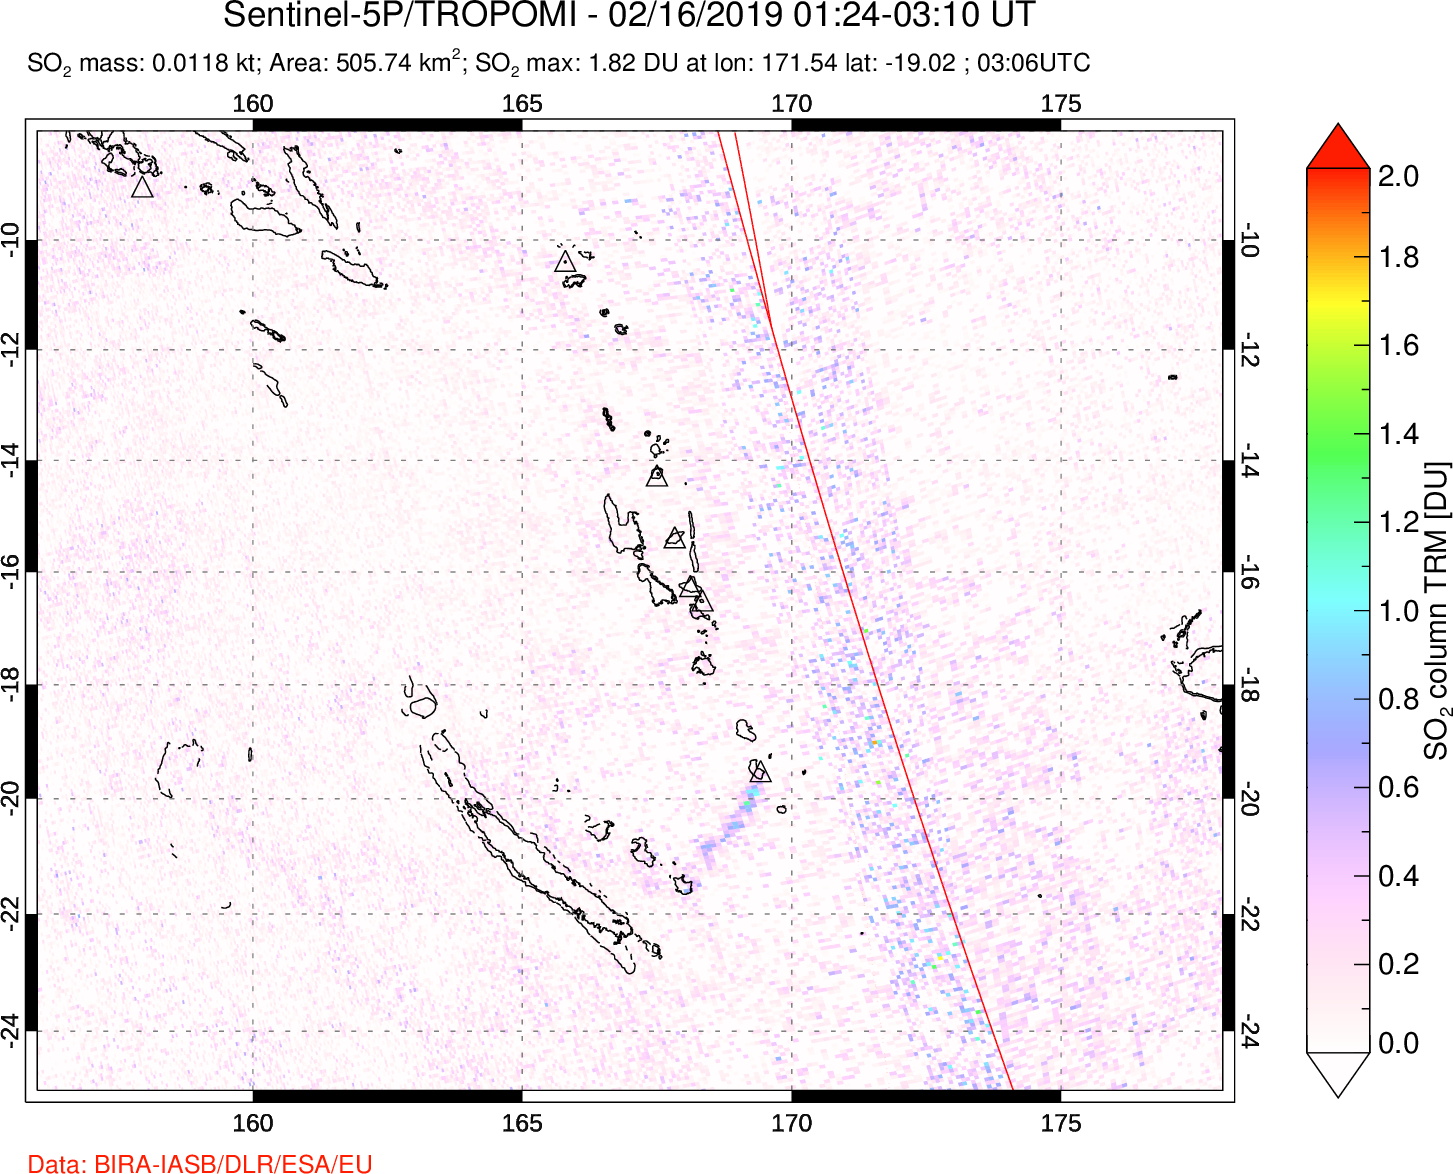 A sulfur dioxide image over Vanuatu, South Pacific on Feb 16, 2019.